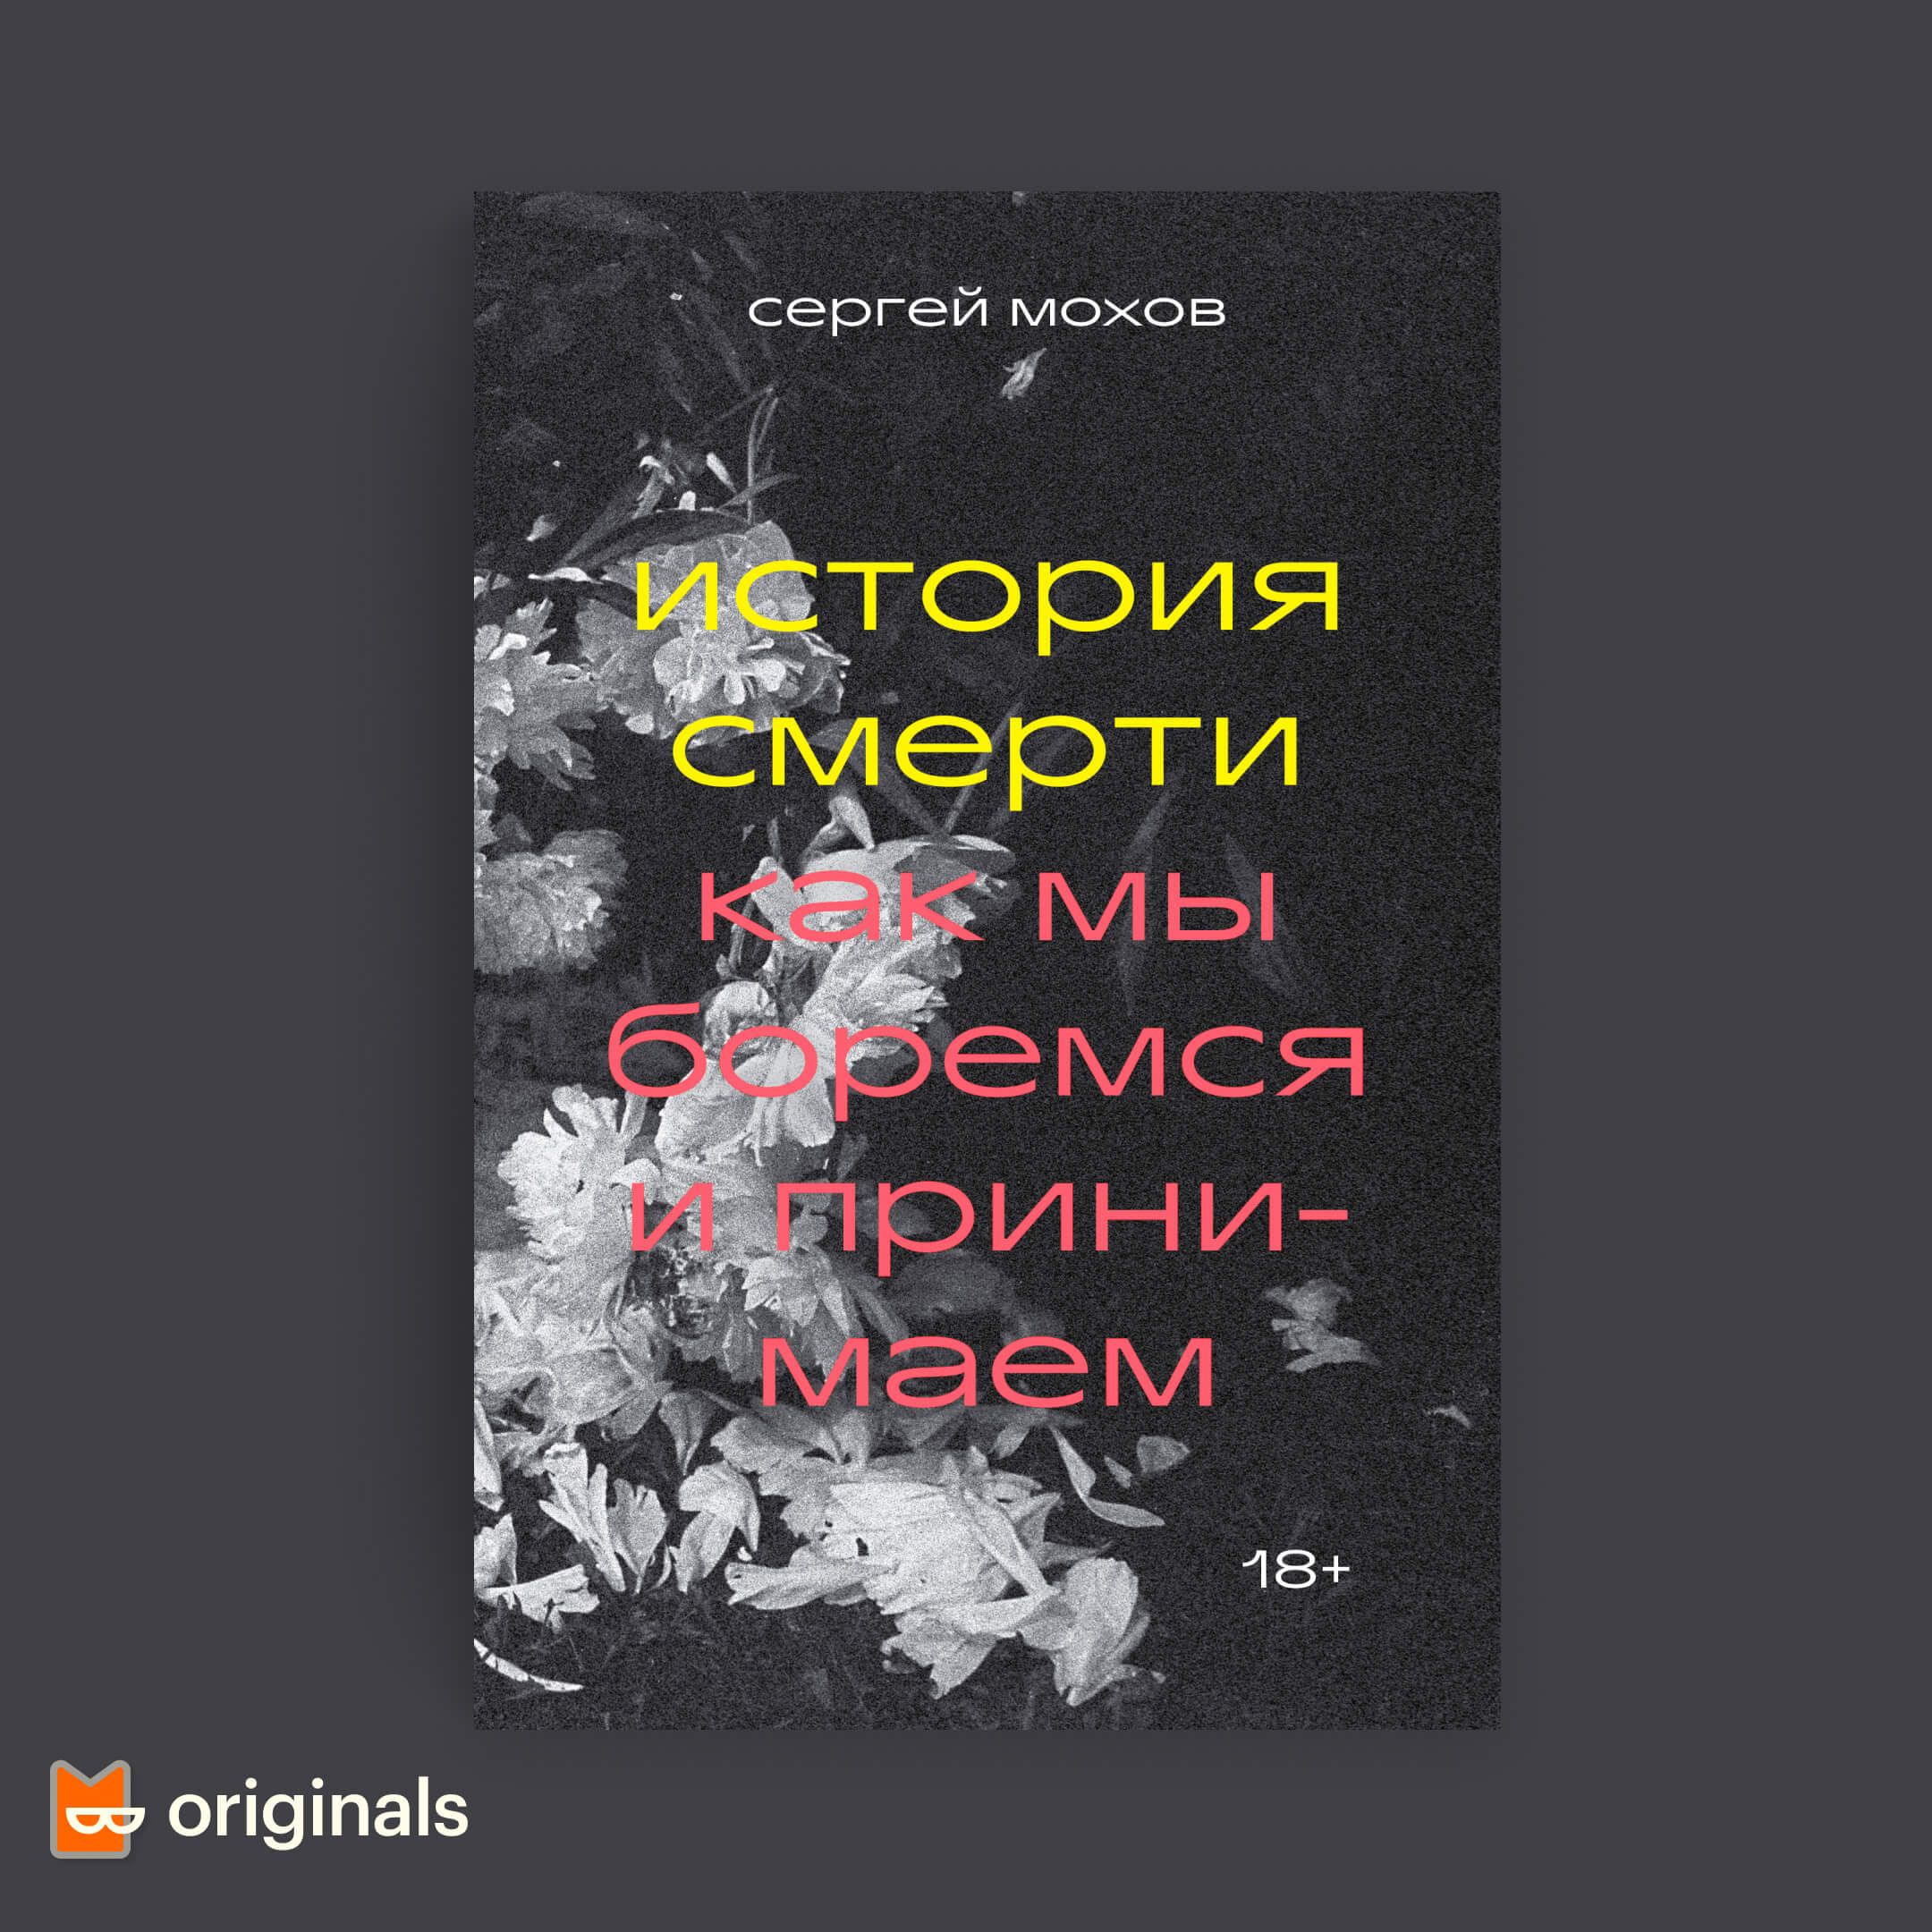 Обложка книги «История смерти» Сергея Мохова